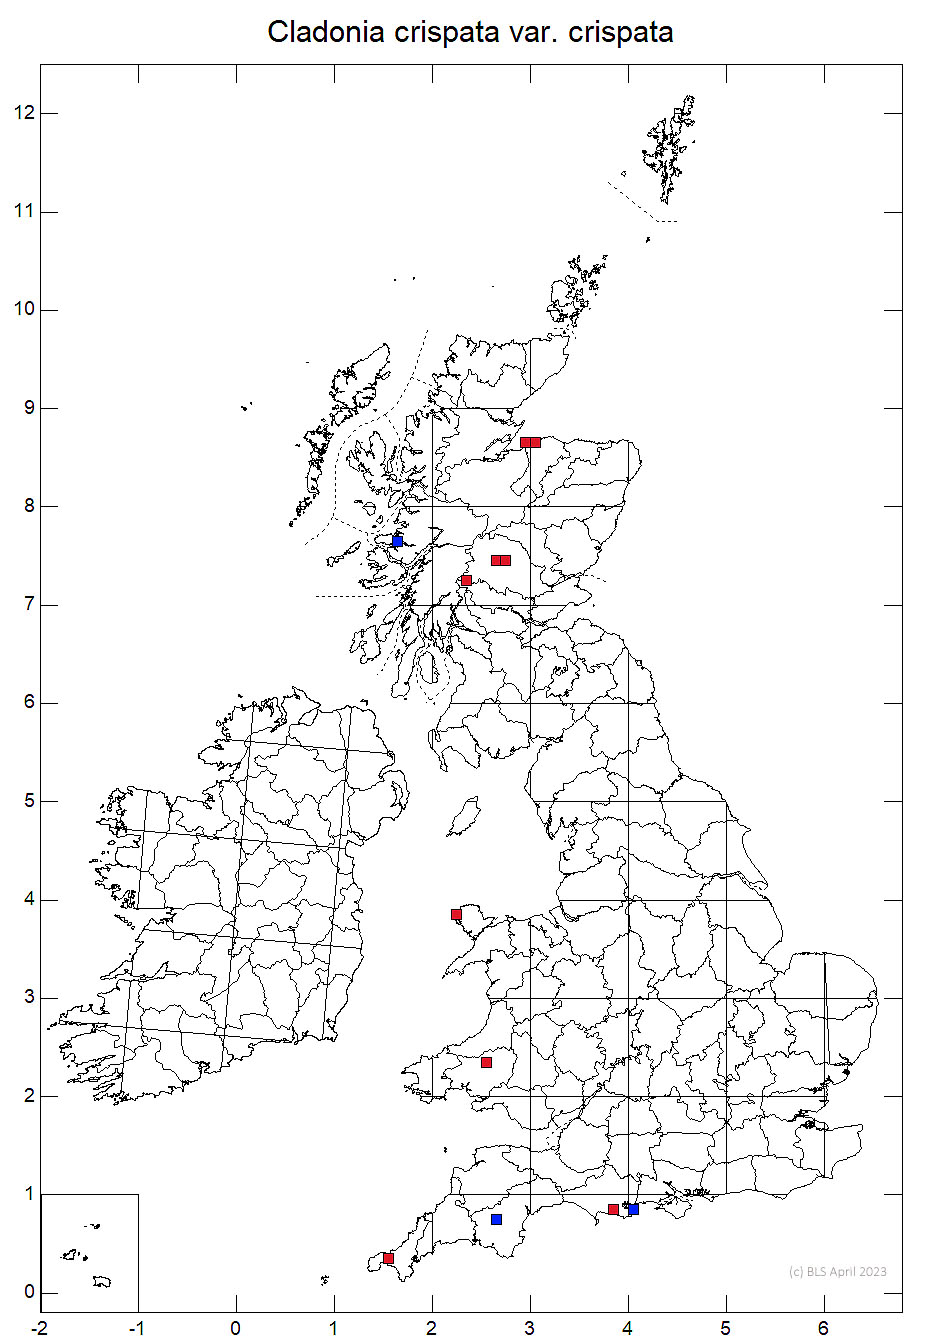 Cladonia crispata var. crispata 10km sq distribution map